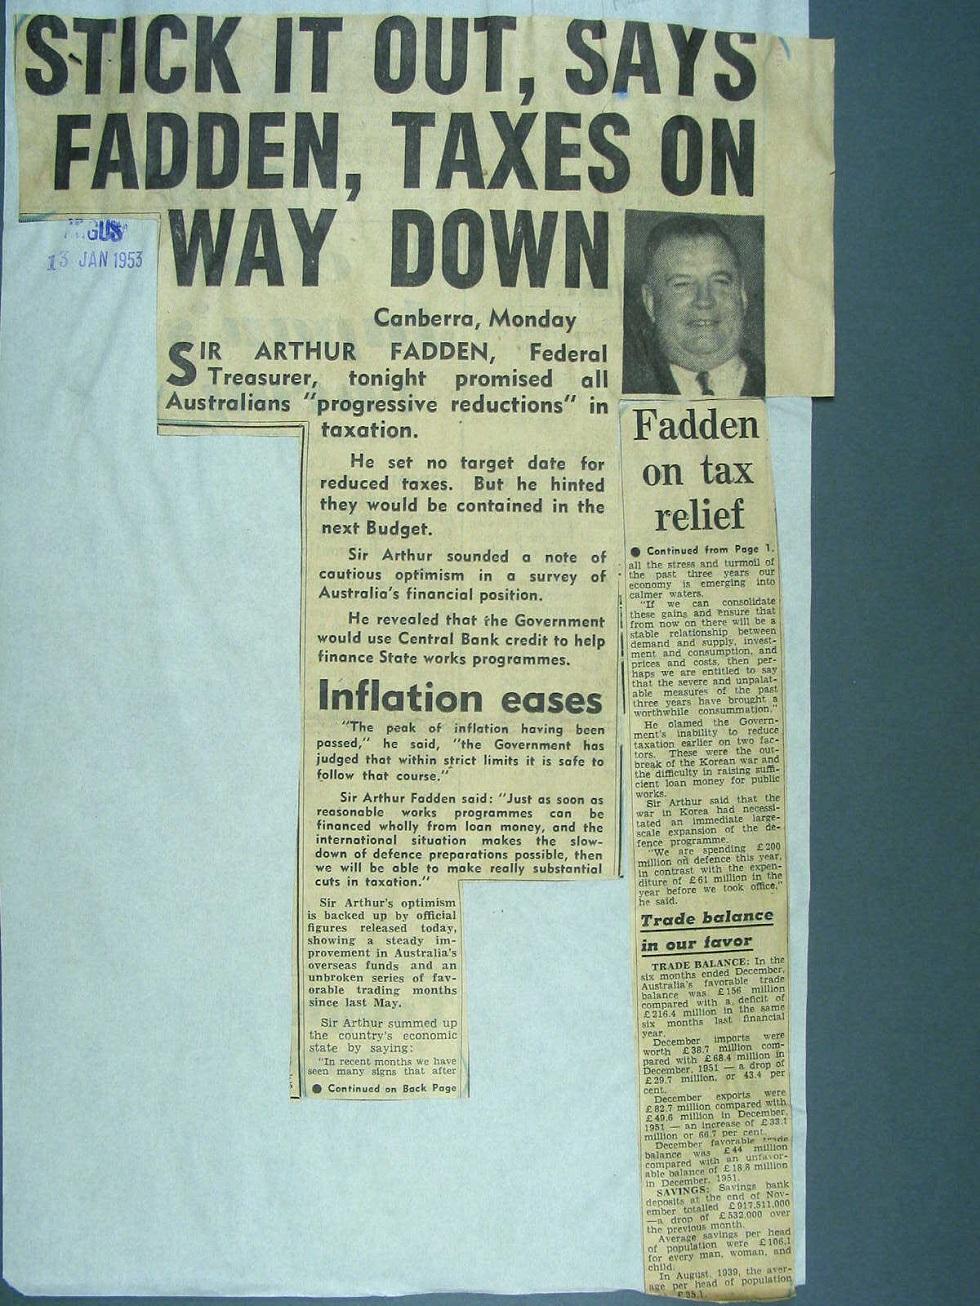 Arthur Fadden delivered a more optimistic budget in 1953